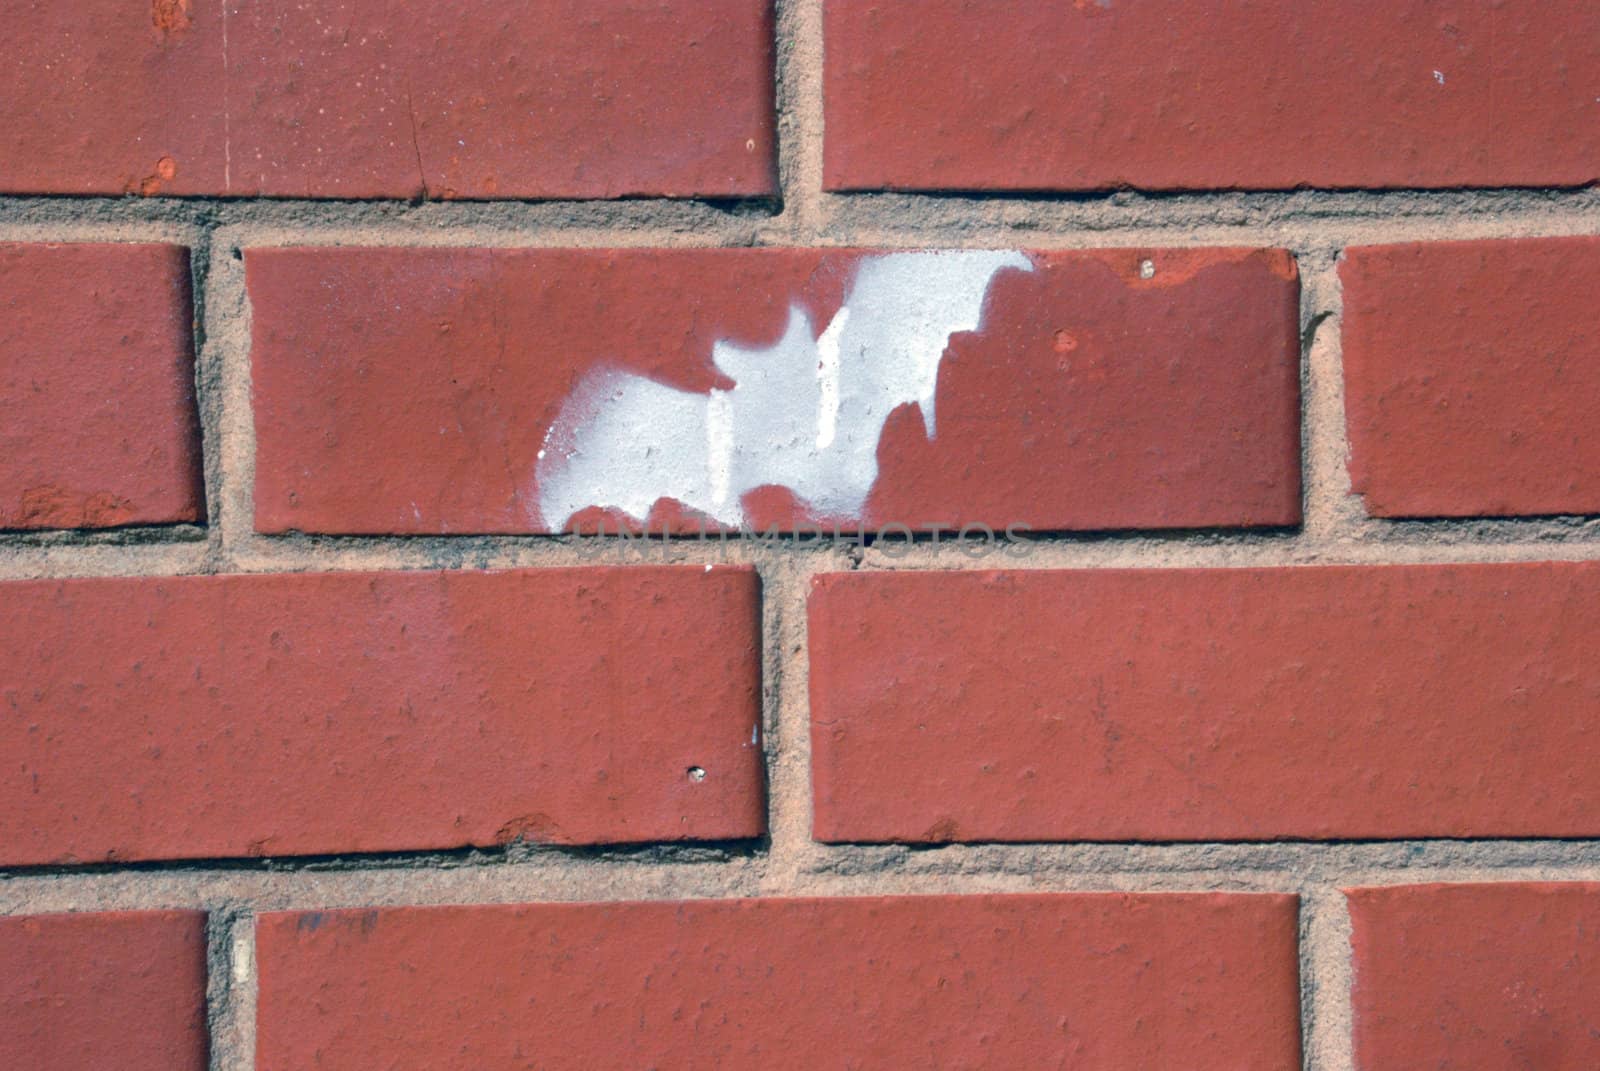 Painted bat - uncommon hero graffiti on the walls